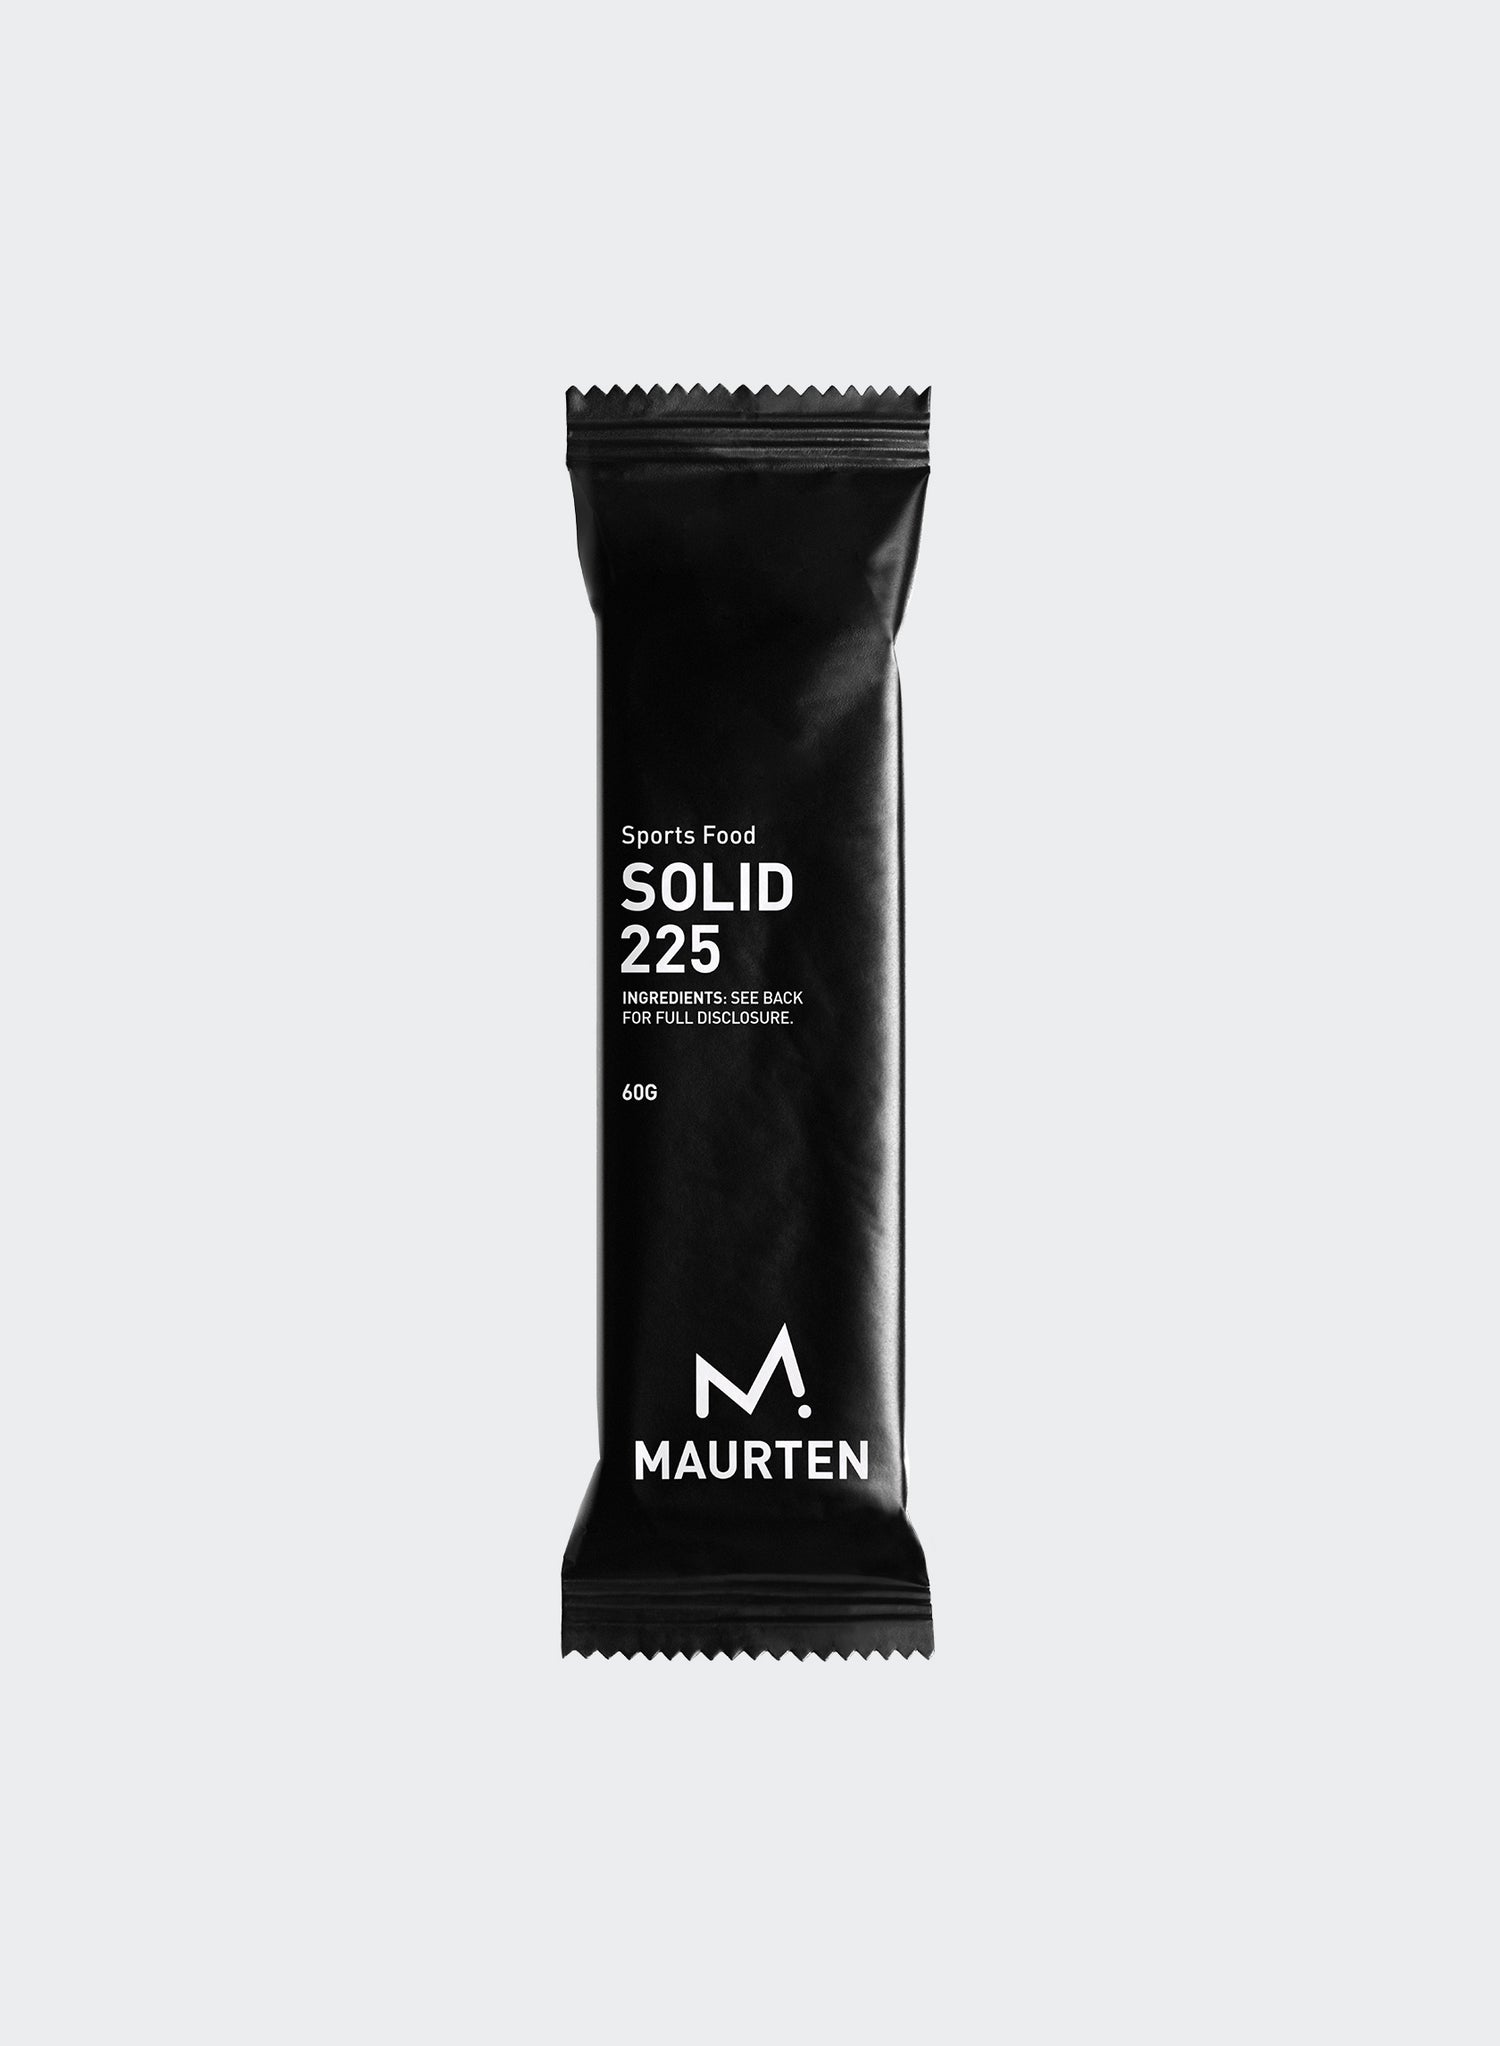 pack of Maurten SOLID 225